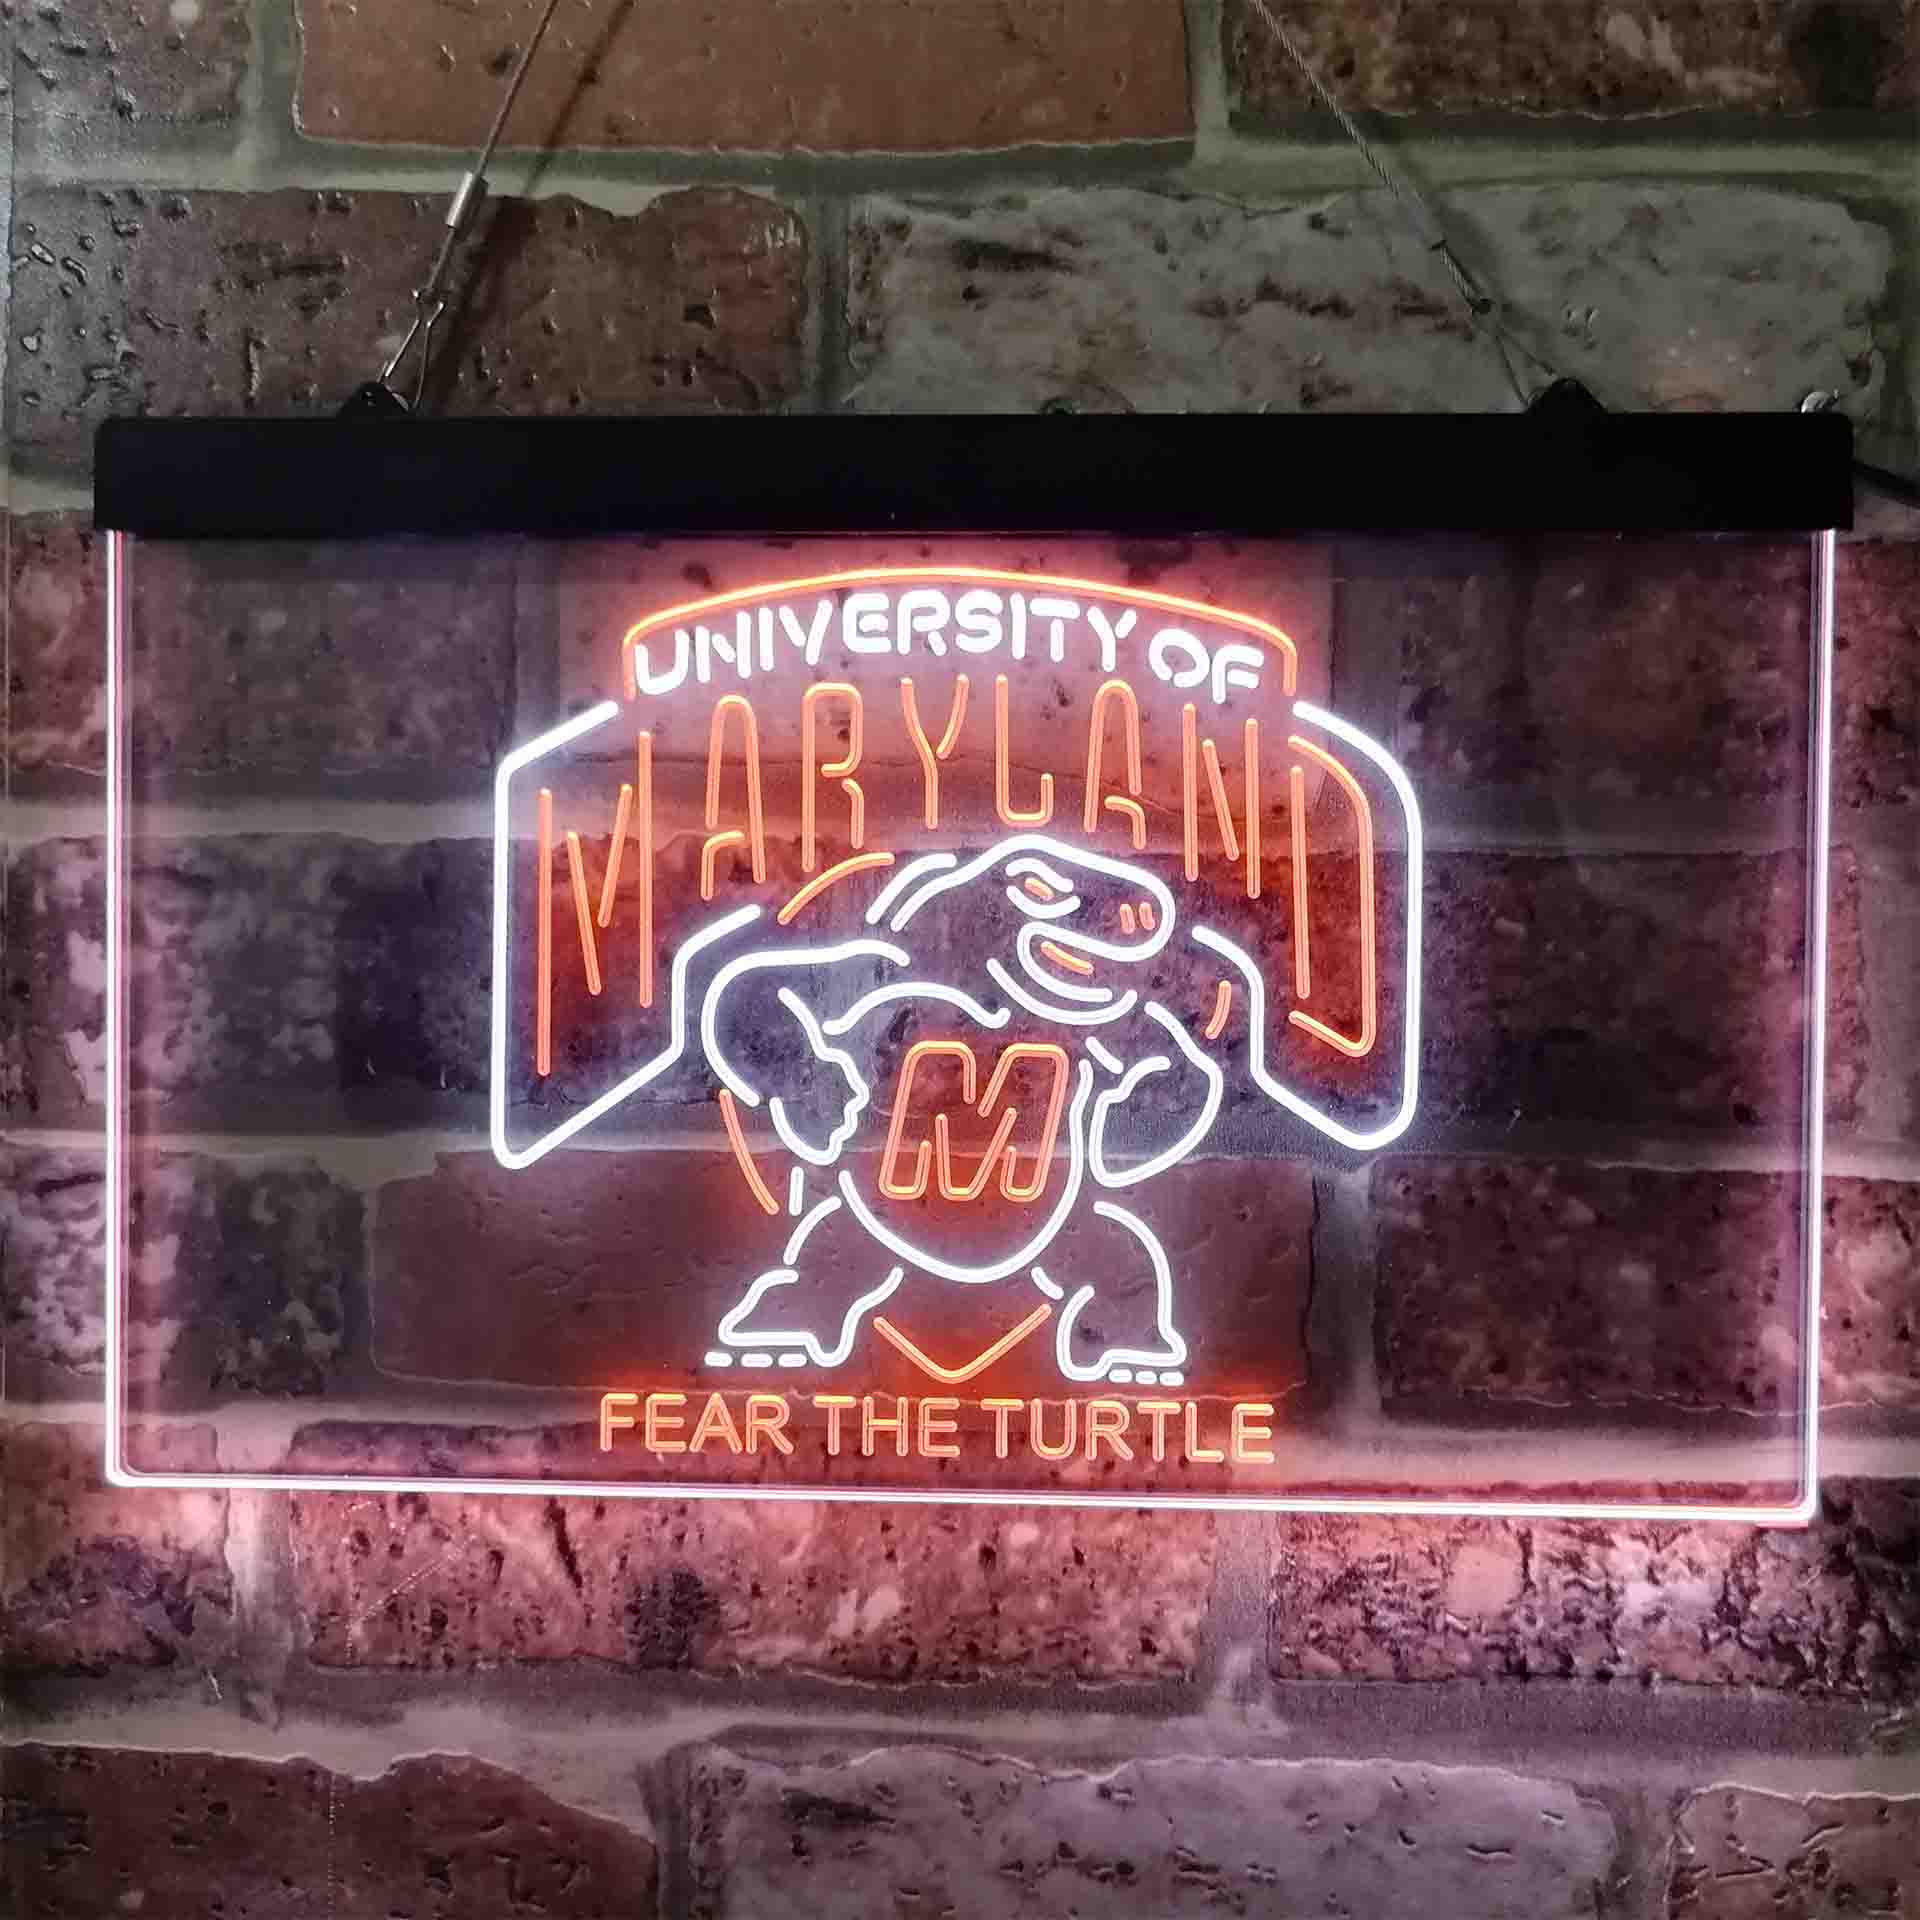 University Football Sport Team Maryland Turtle University NCAA College Football Fear The Turtle Neon LED Sign